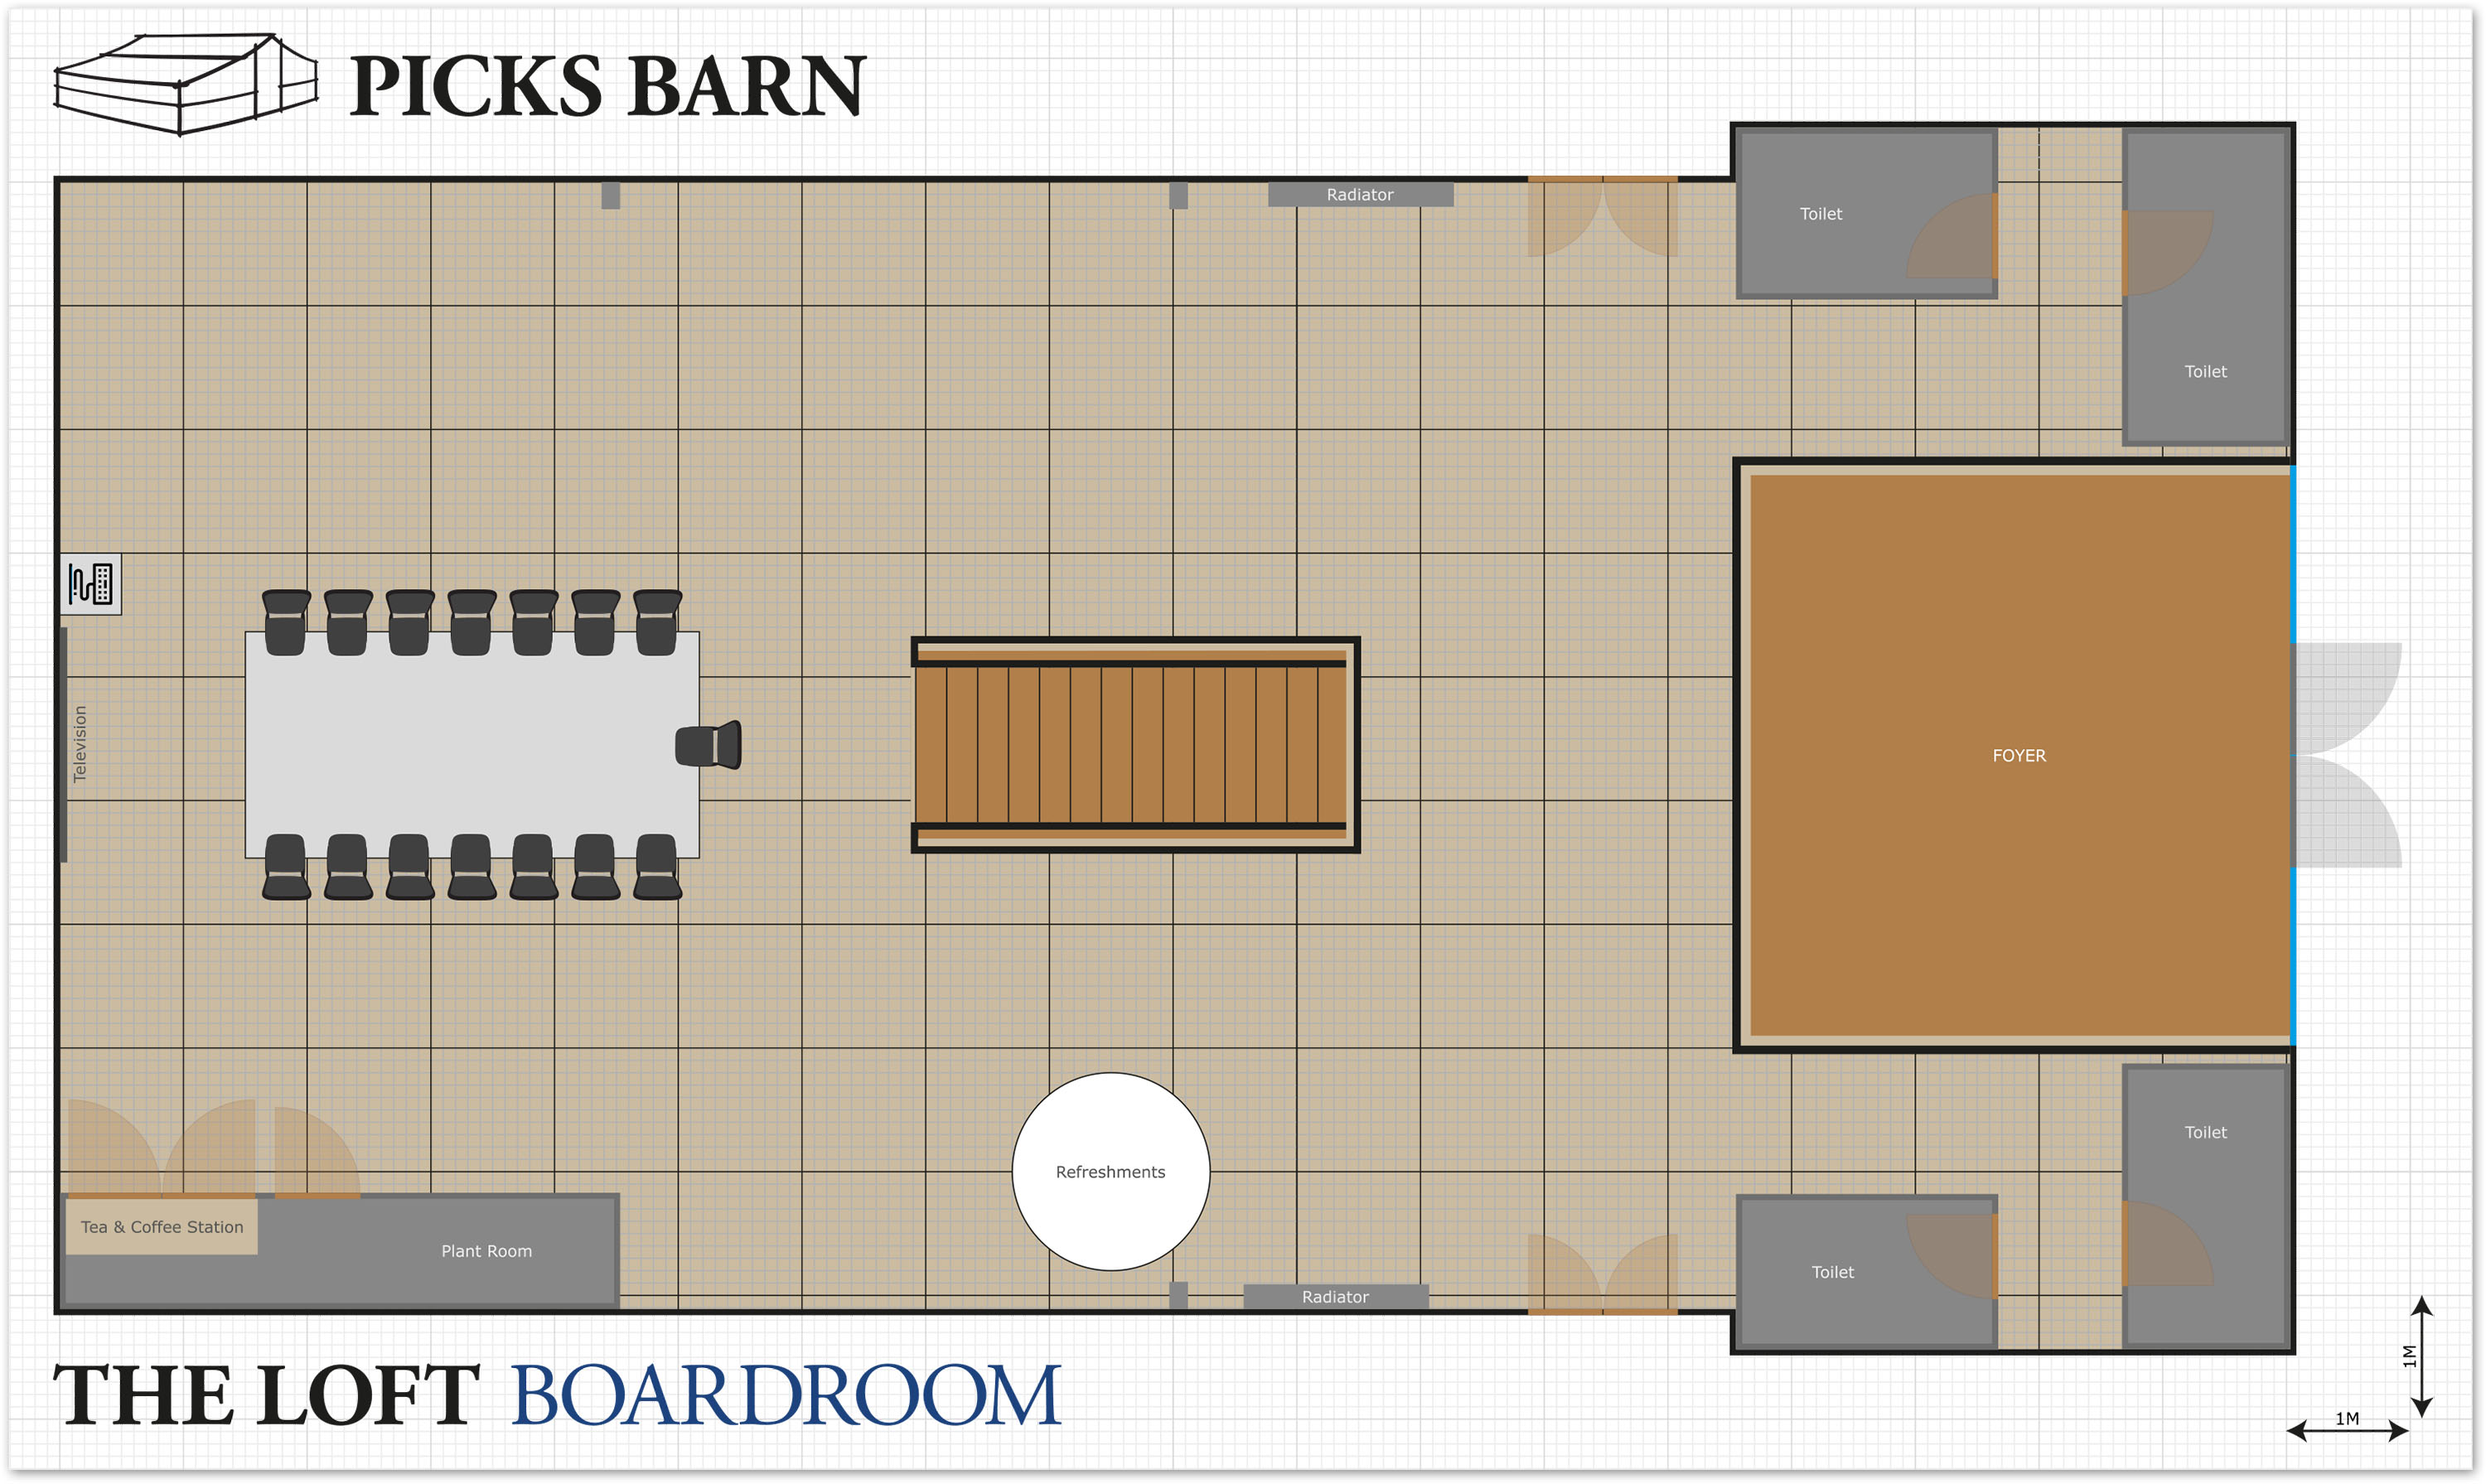 Picks Barn Loft Boardroom Layout Image